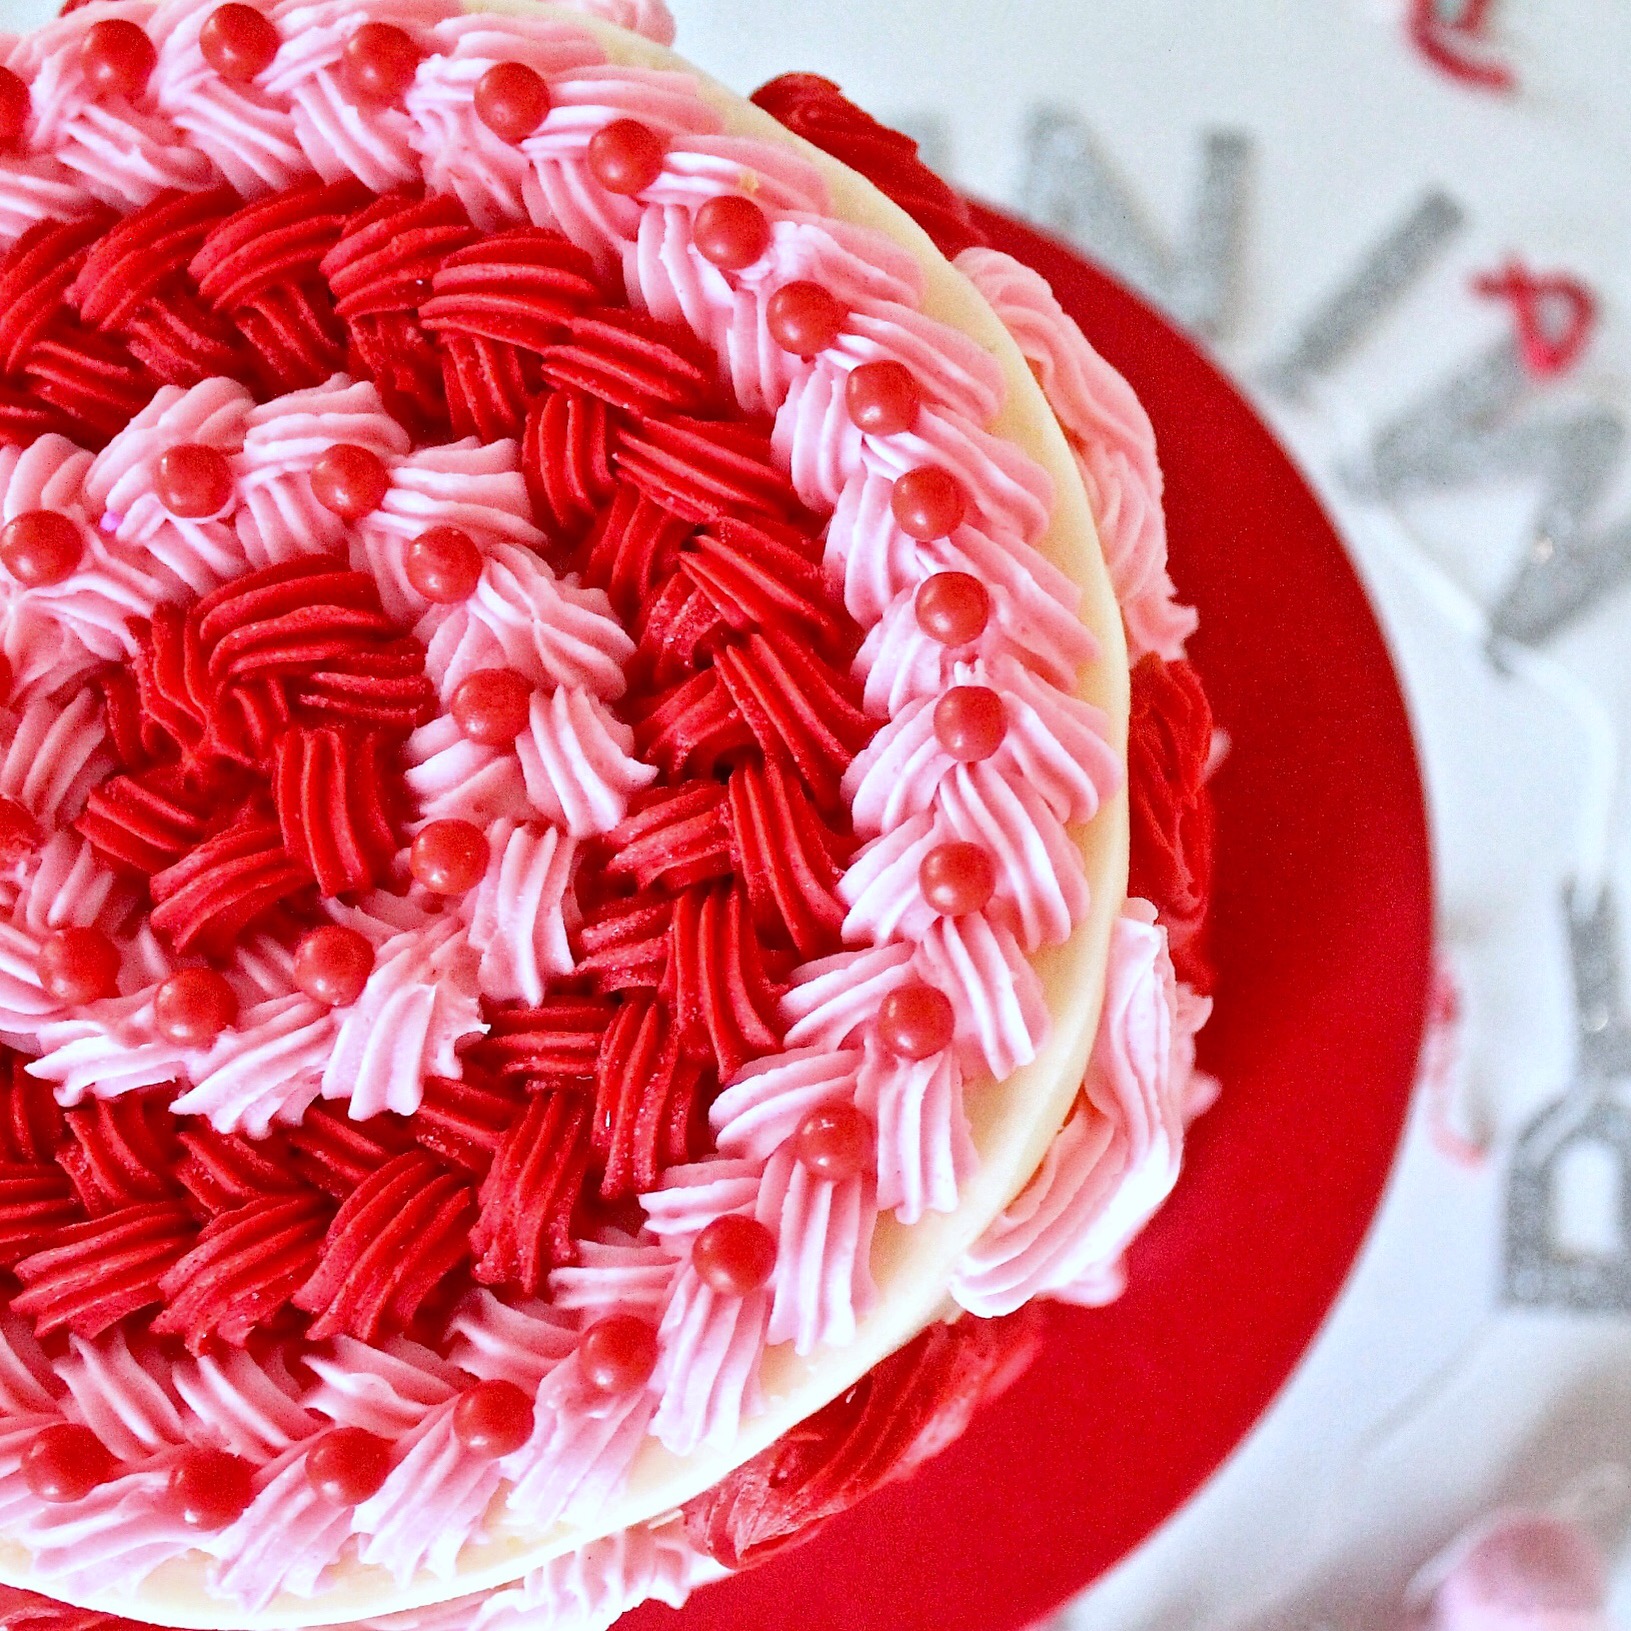 red velvet xo valentine's day cake idea. www.cakebycourtney.com